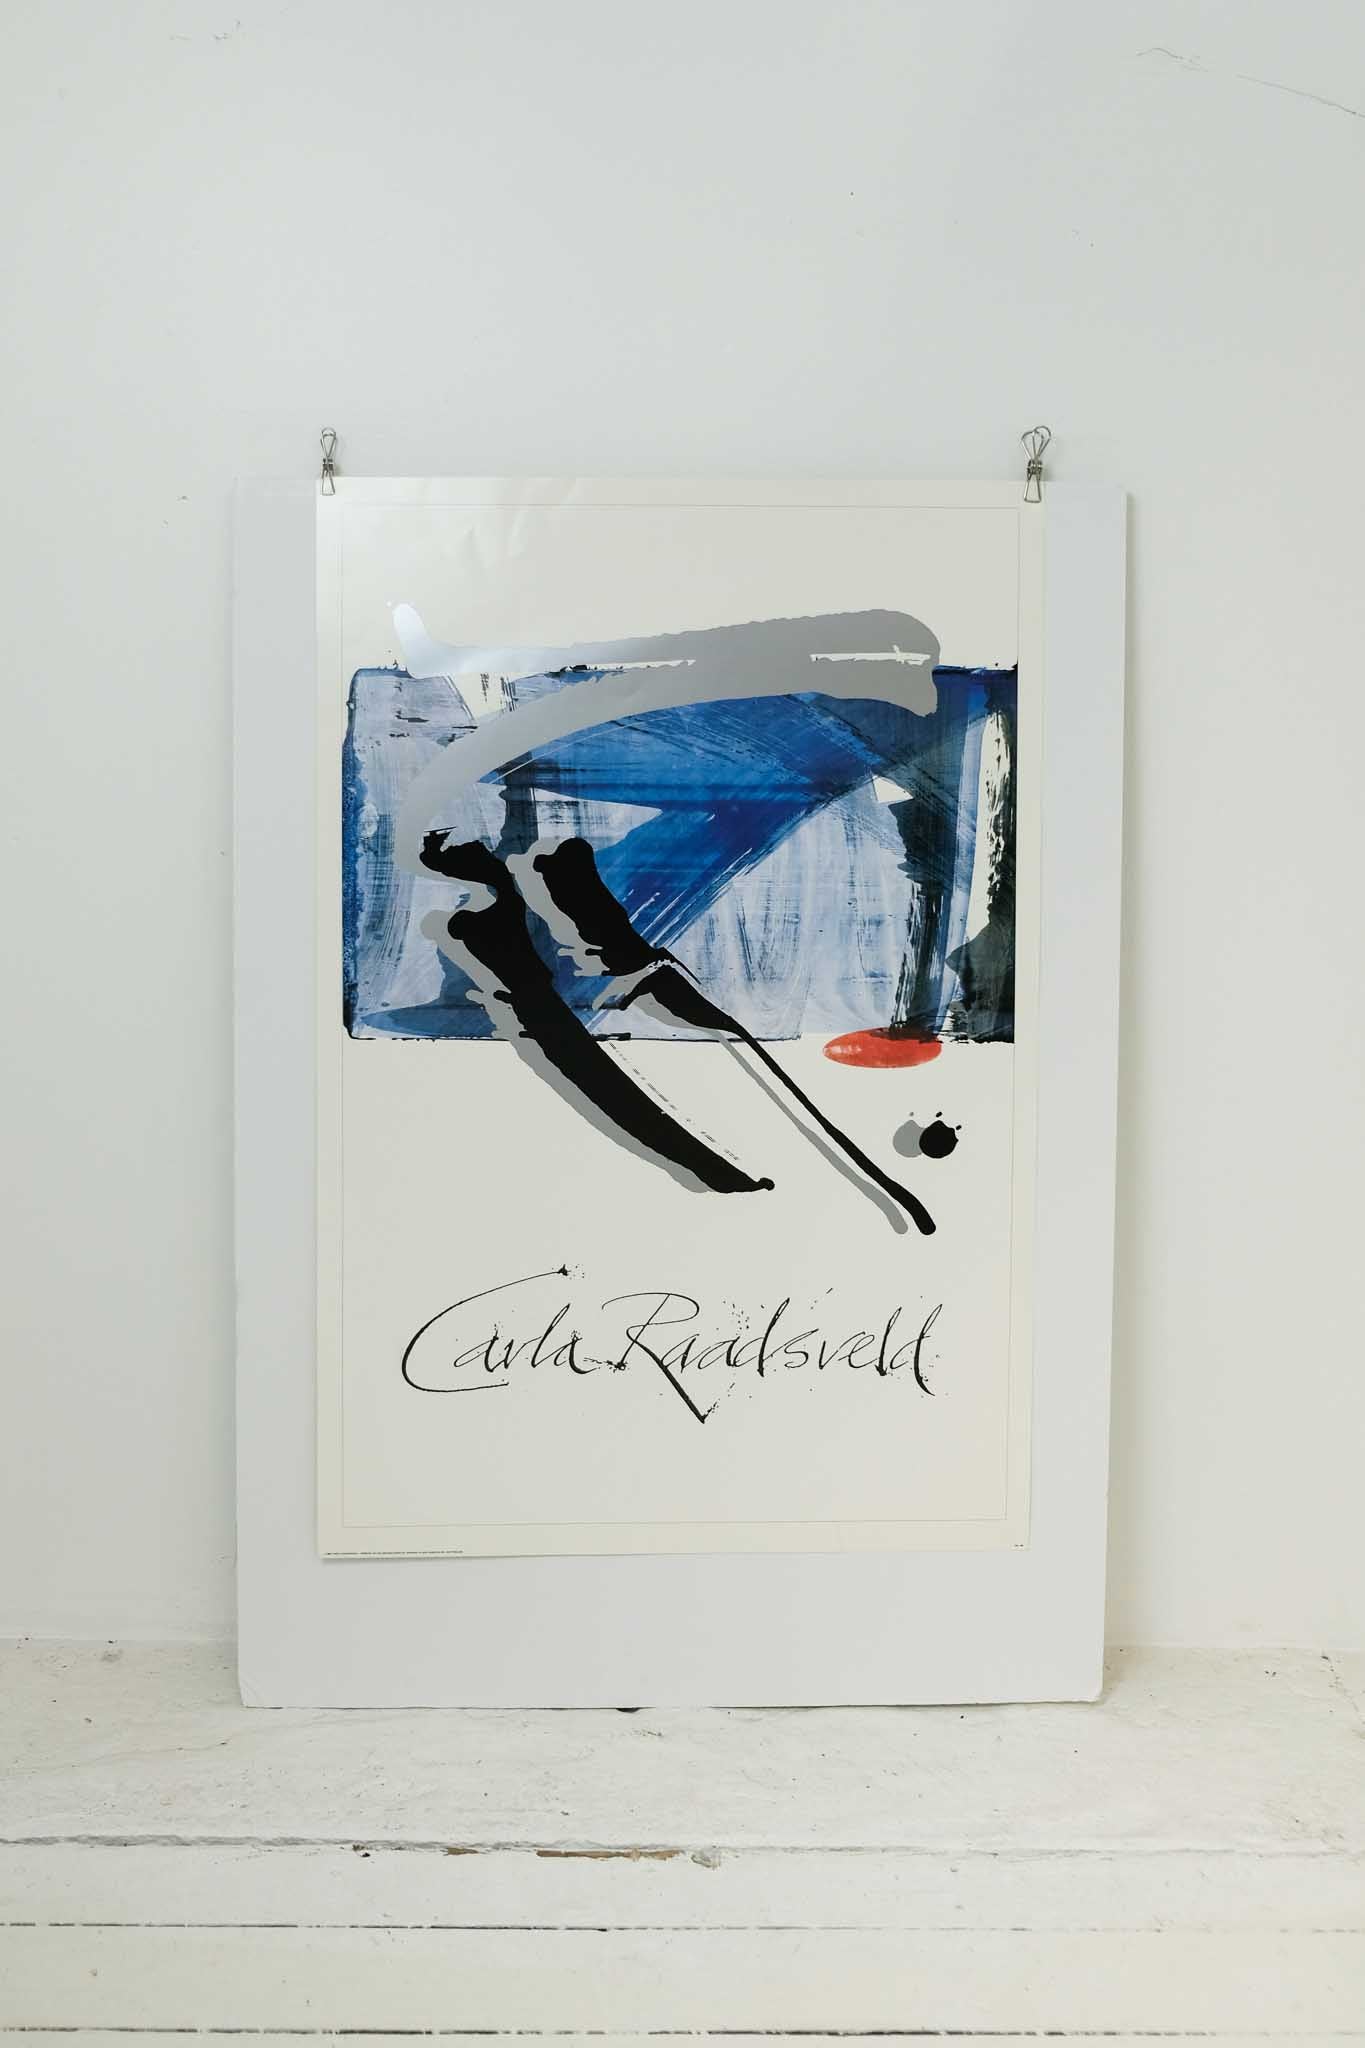 Carla Raadsveld 1987 Abstract Print